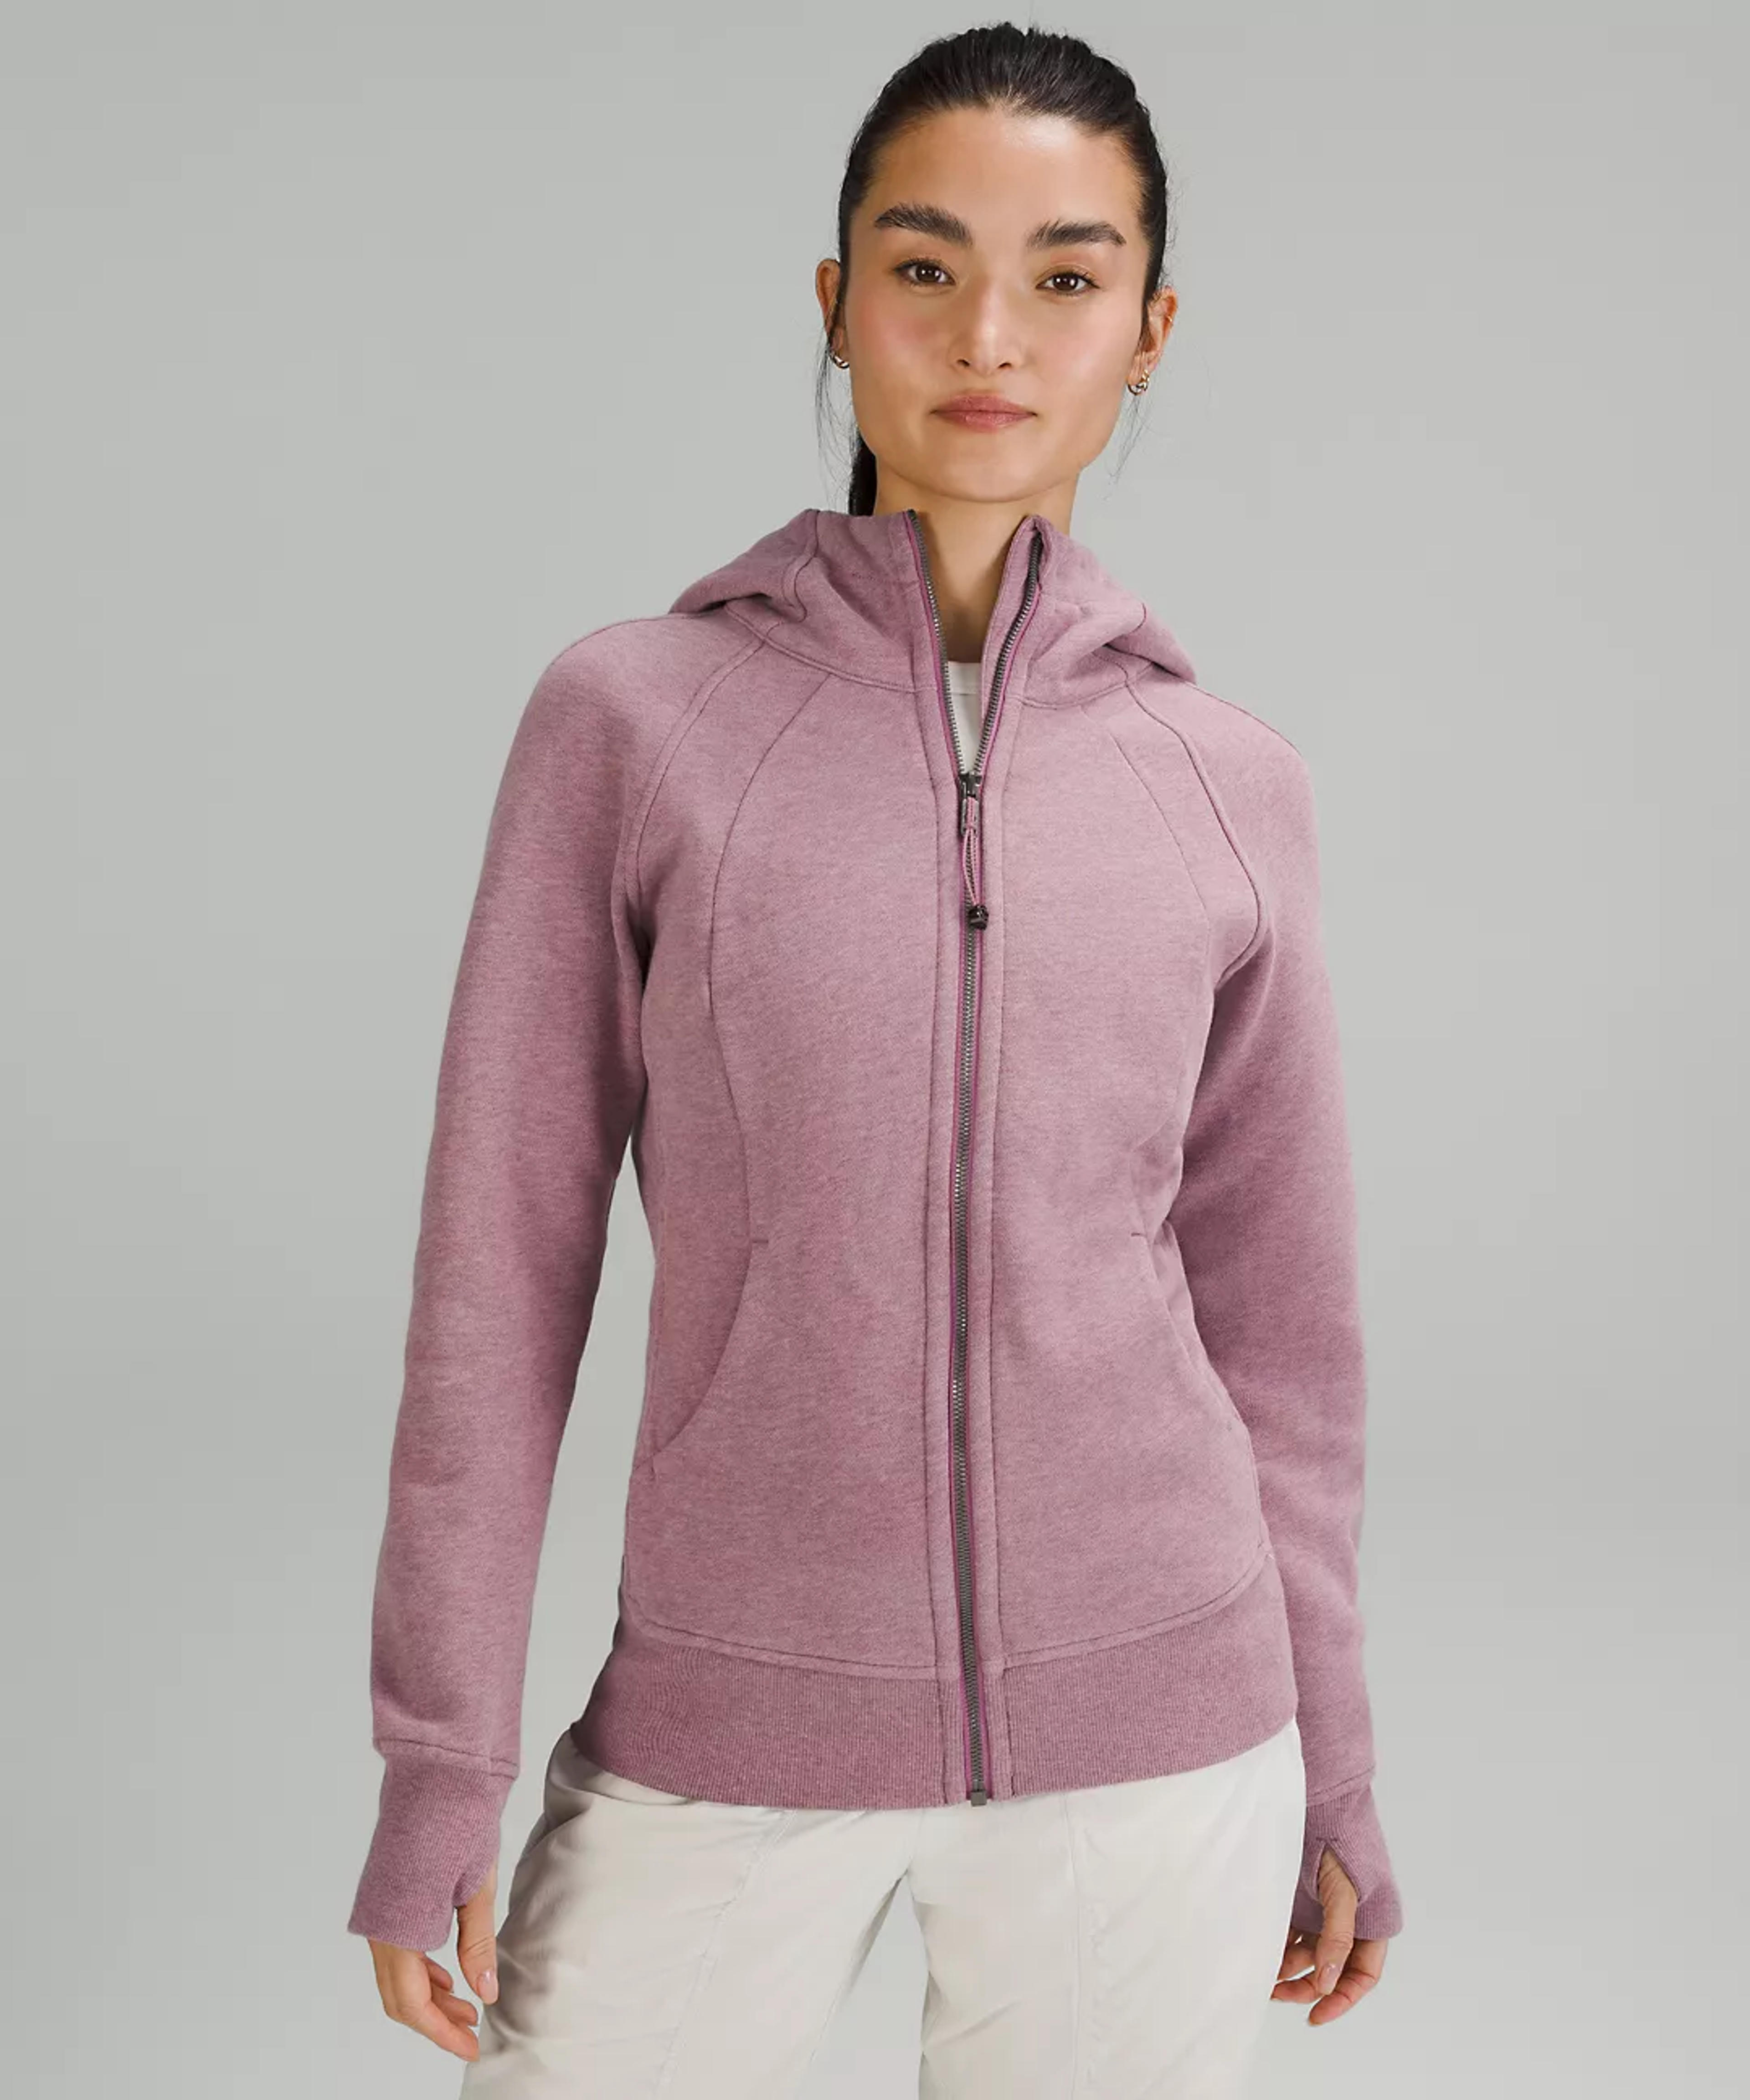 Scuba Full-Zip Hoodie | Women's Hoodies & Sweatshirts | lululemon